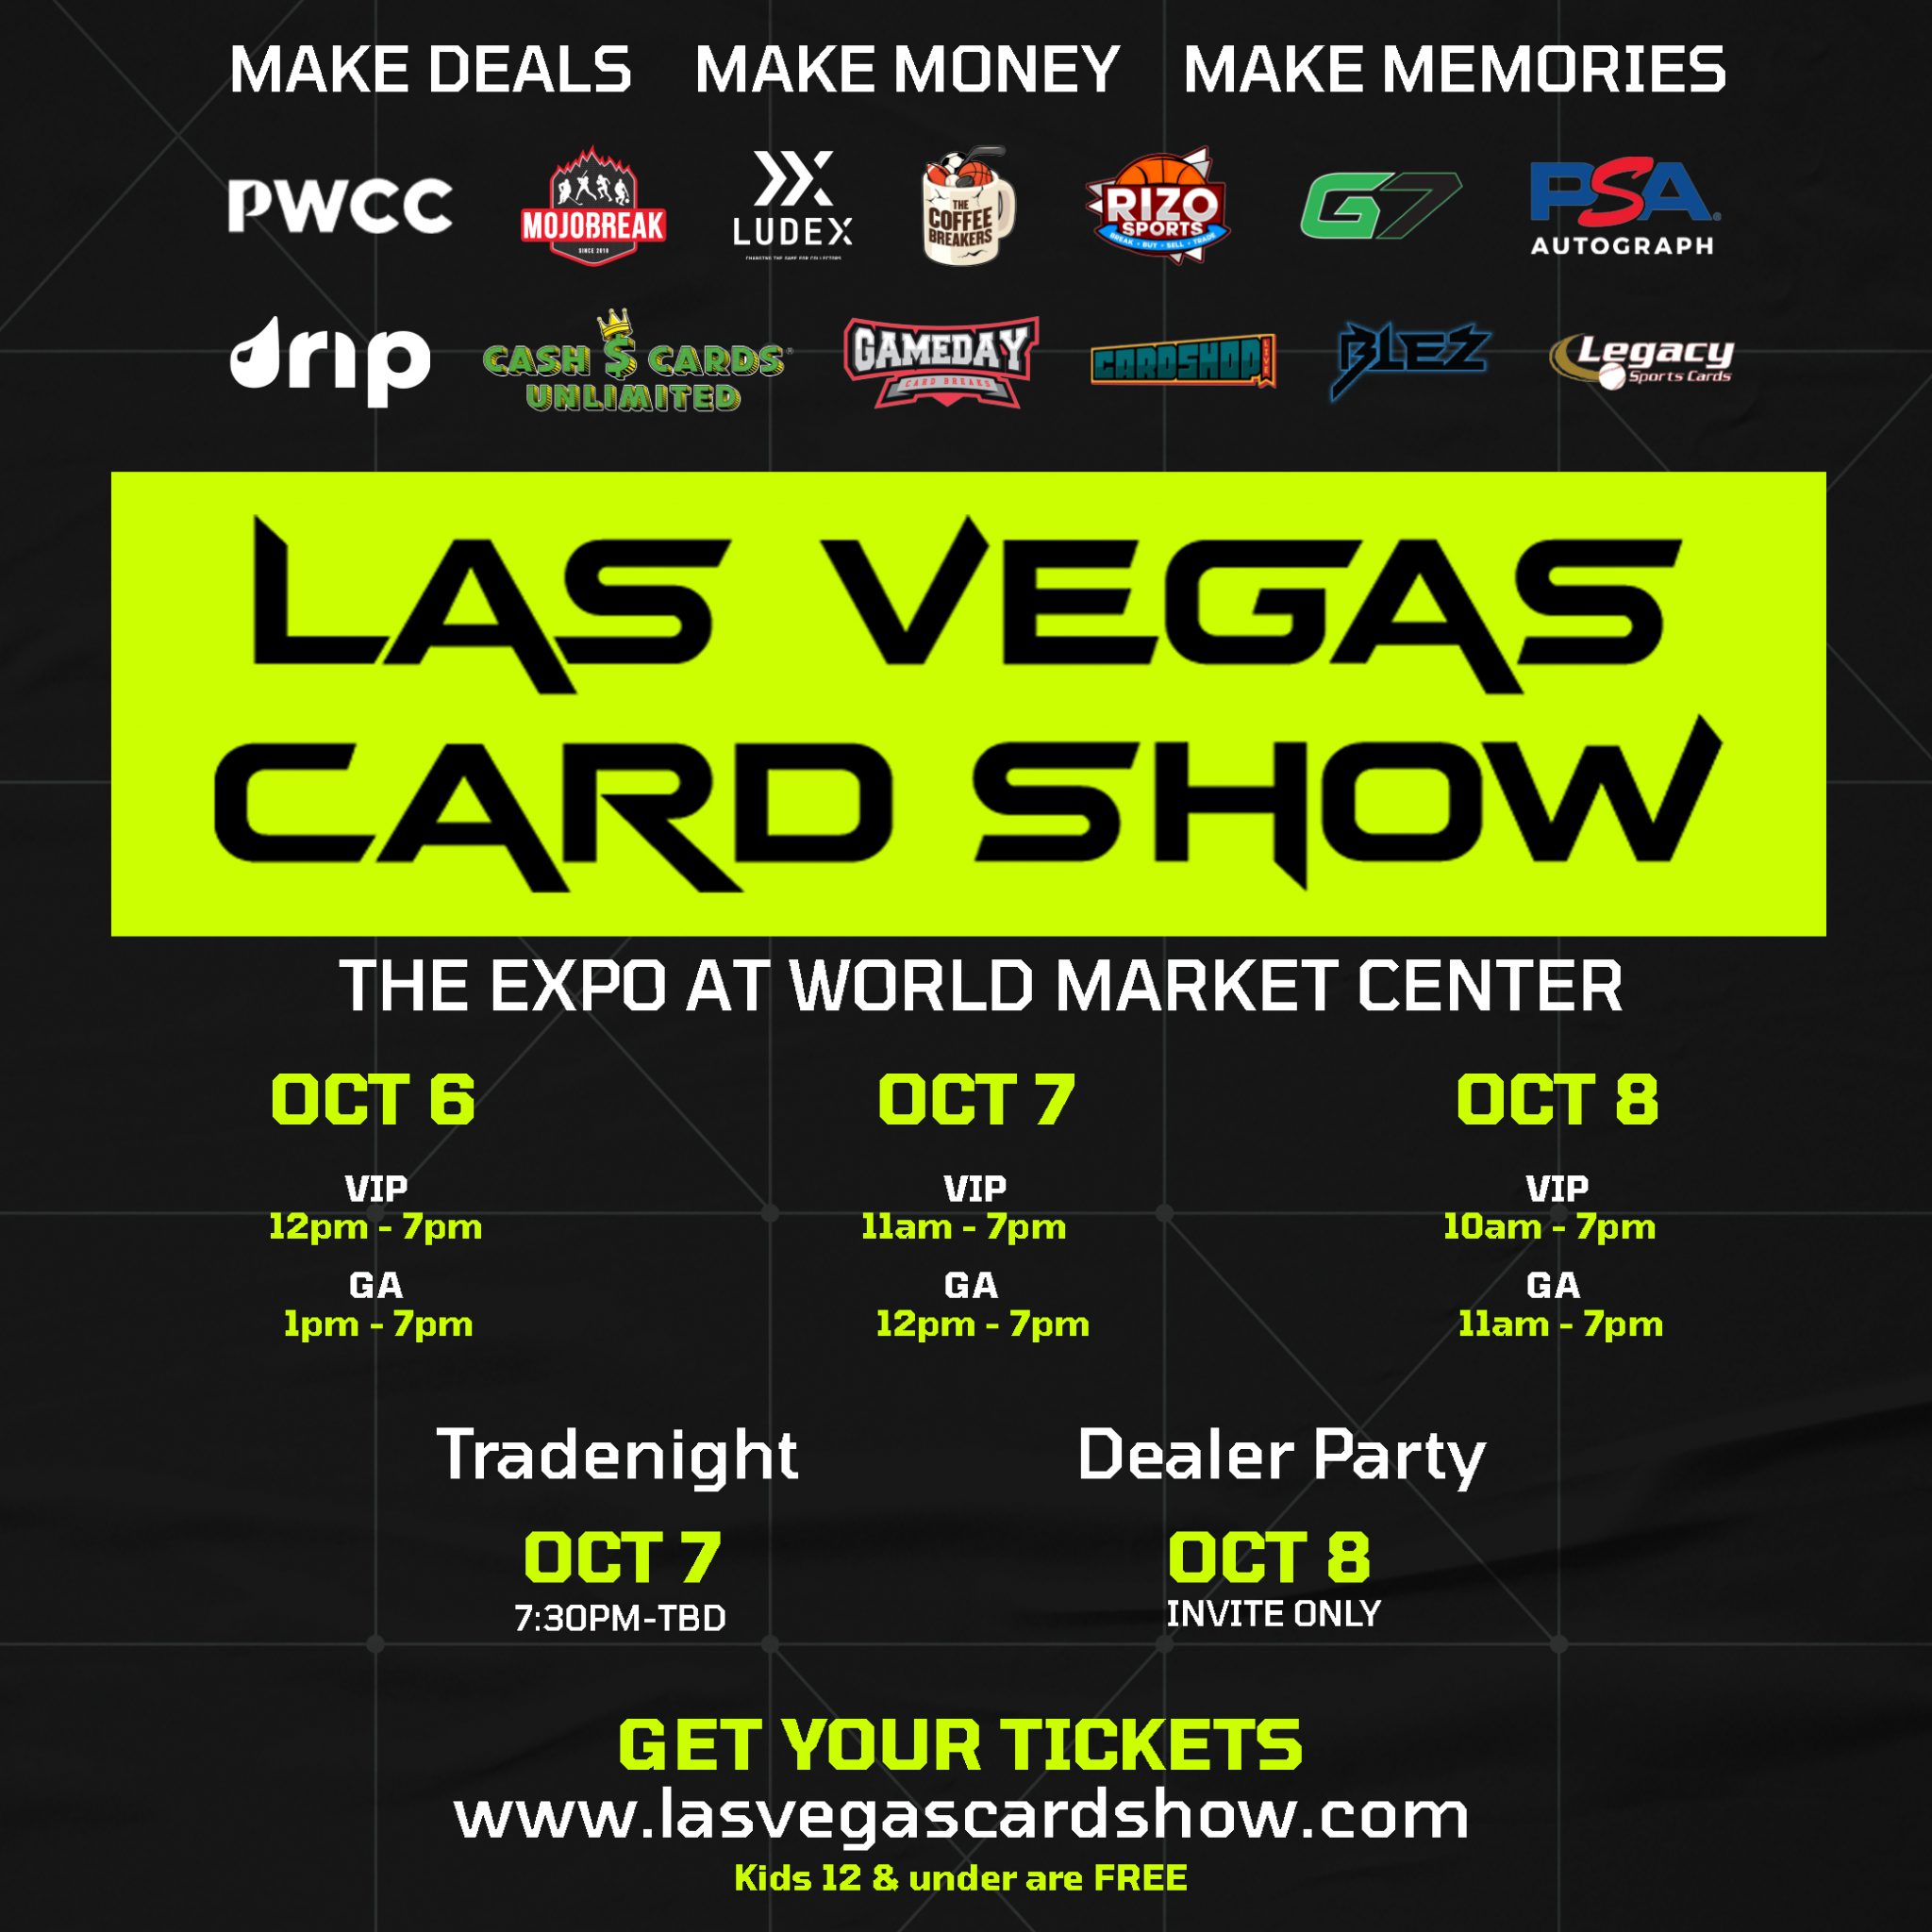 Las Vegas Card Show